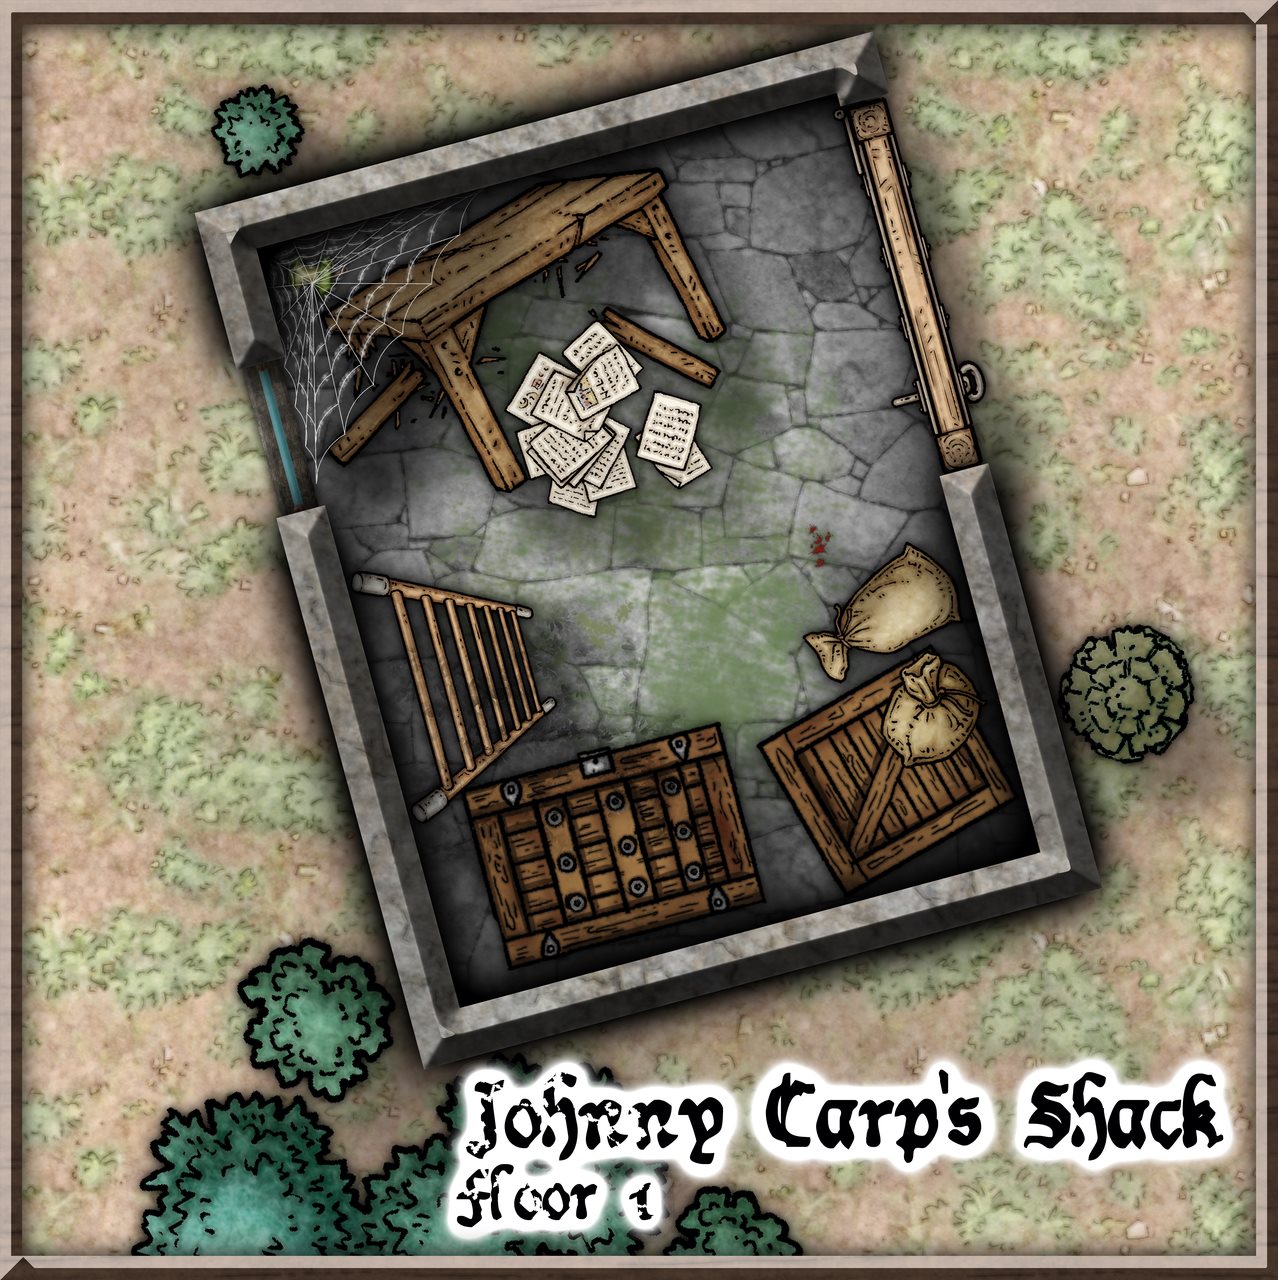 Nibirum Map: johnny carp's shack by arsenico13